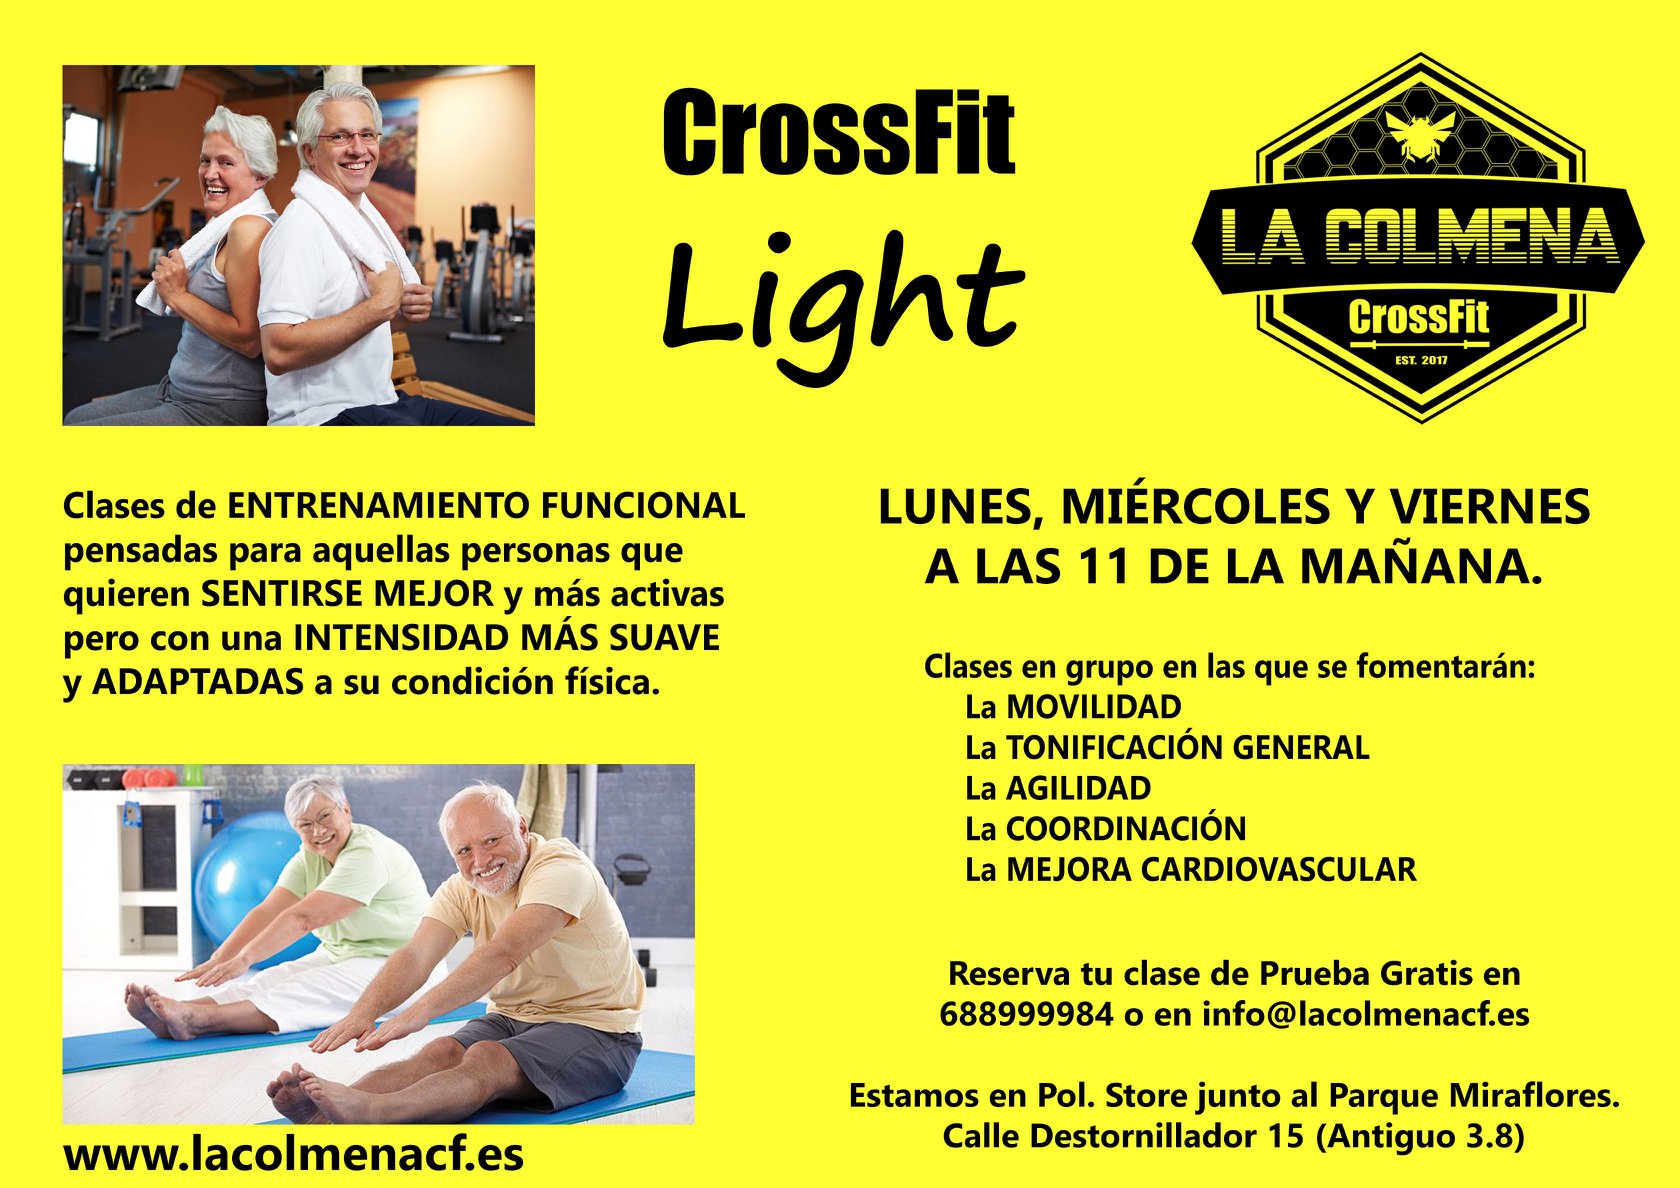 La Colmena CrossFit